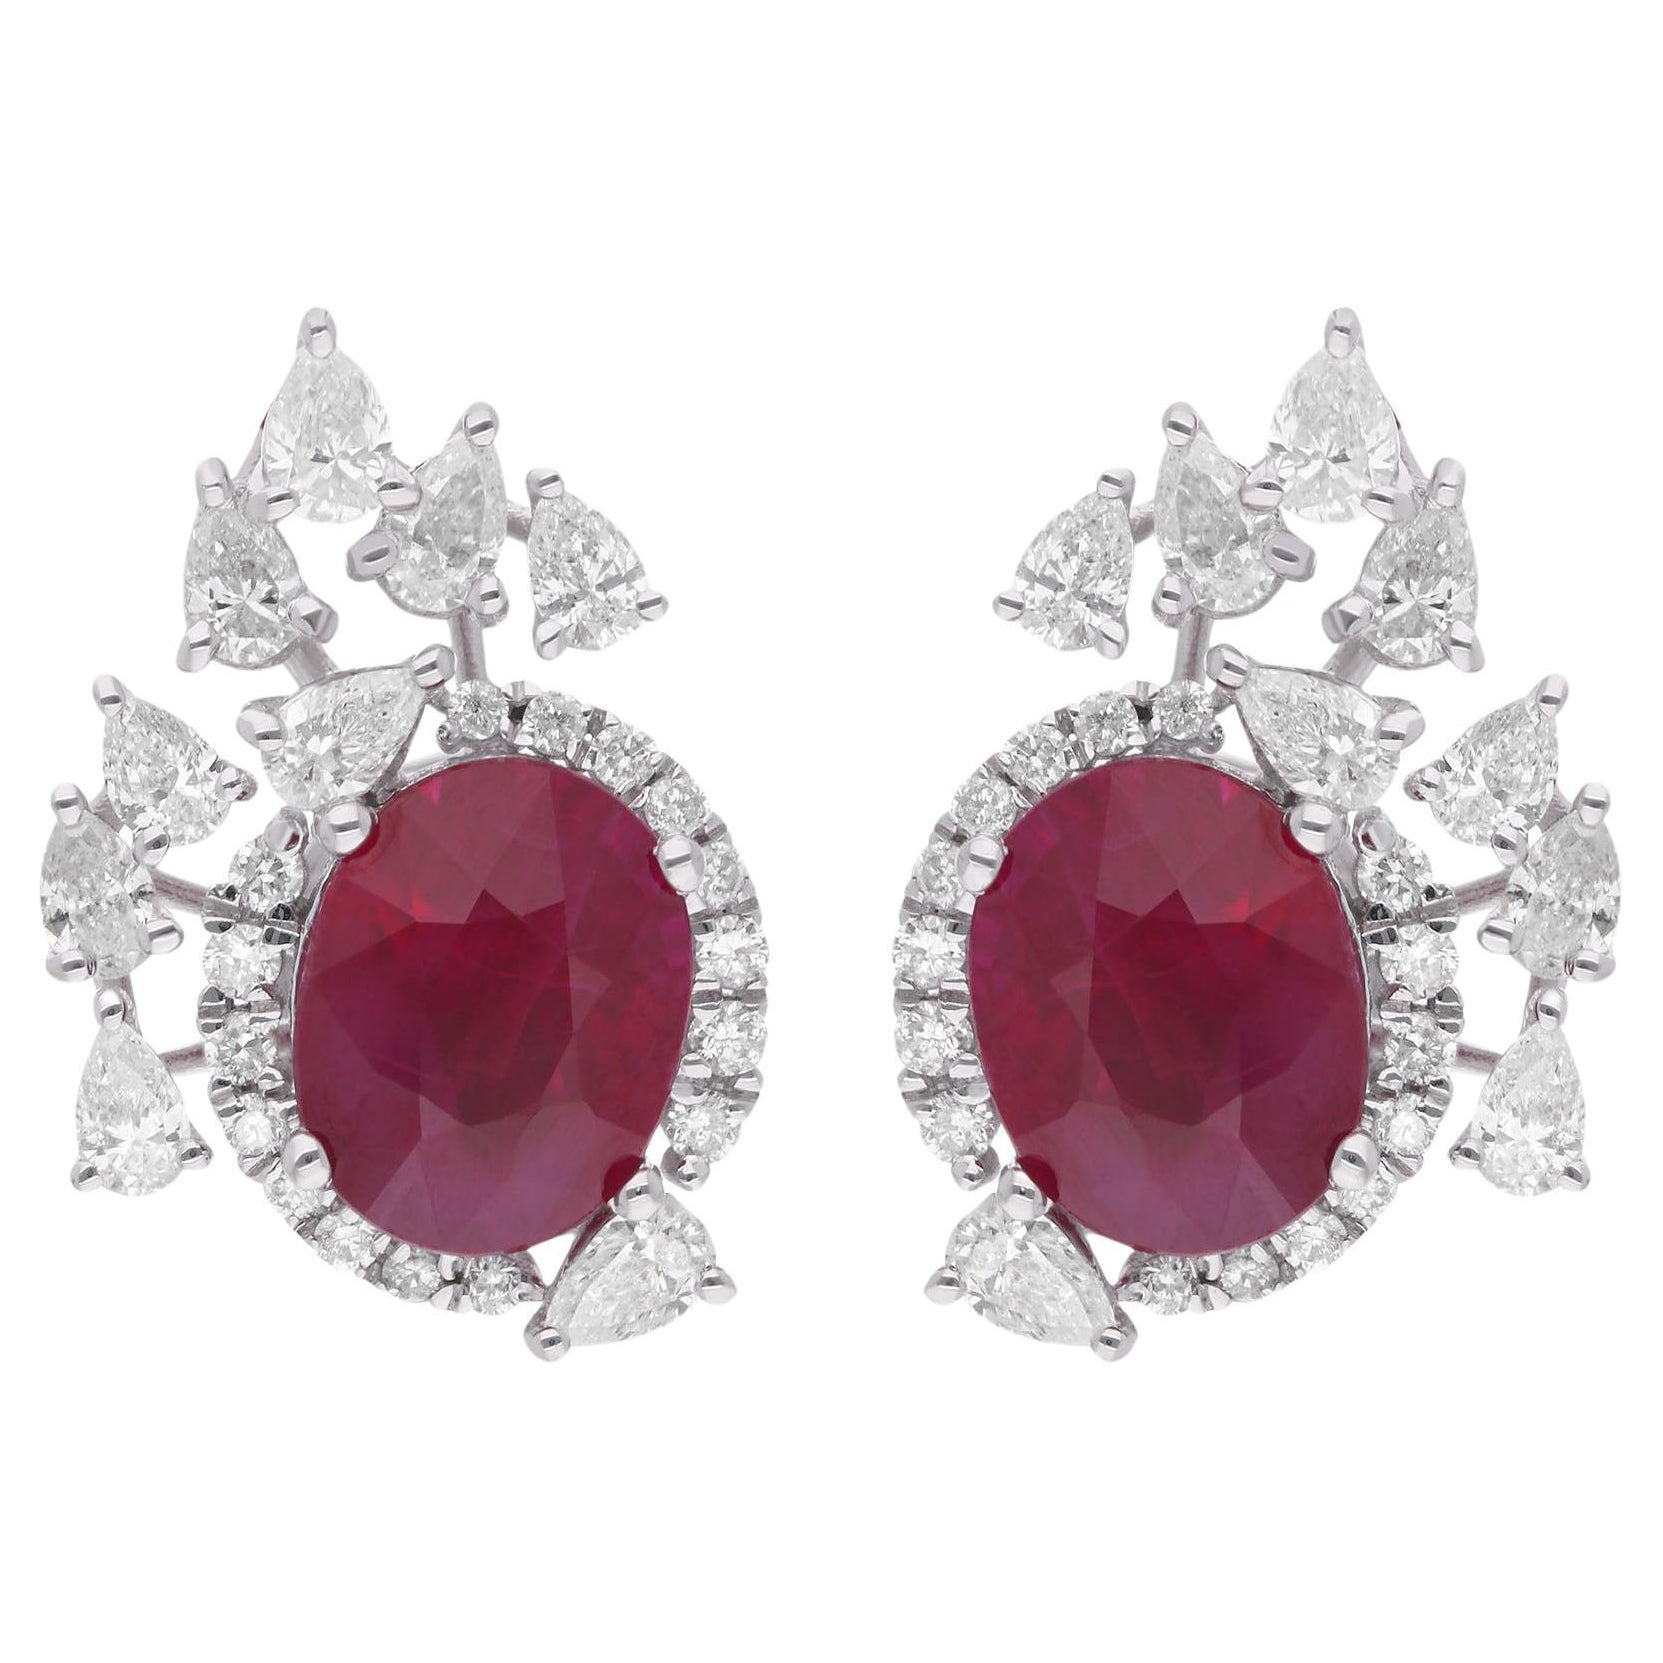 Oval Ruby Gemstone Stud Earrings Diamond 14 Karat White Gold Handmade Jewelry